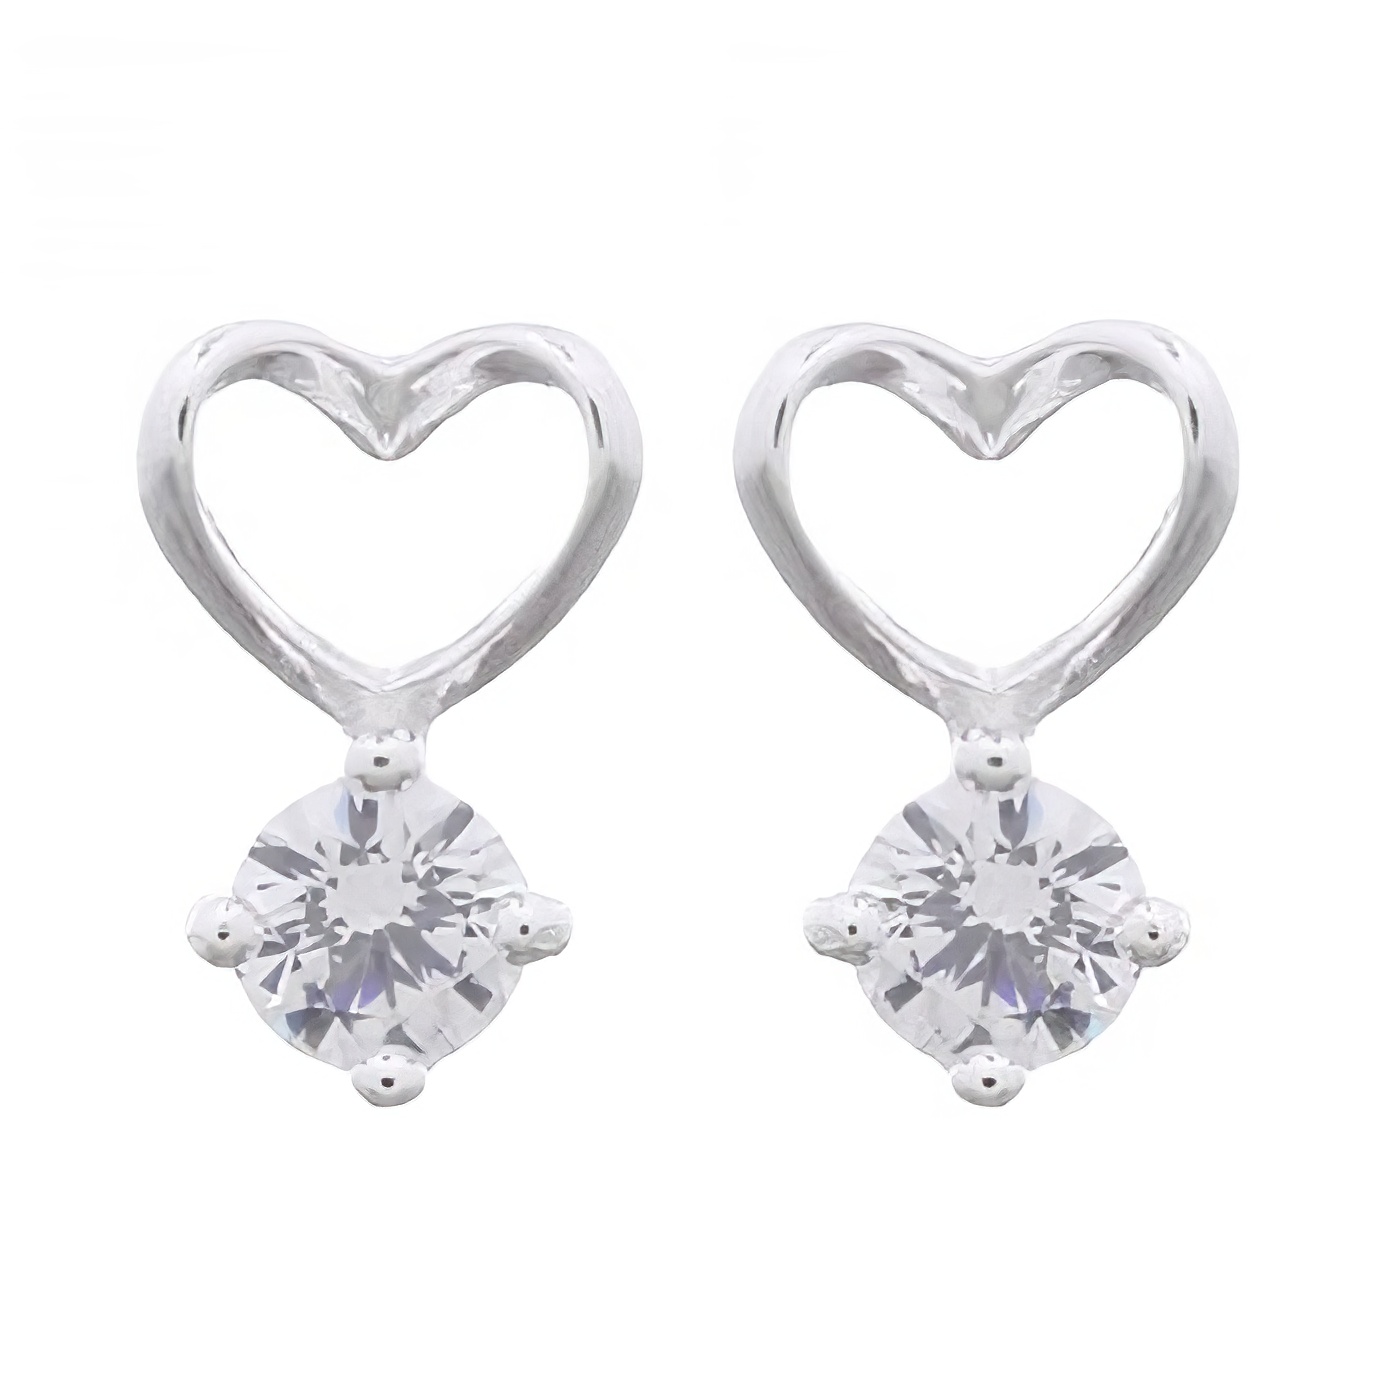 Elegant CZ White With 925 Silver Heart Stud Earrings by BeYindi 